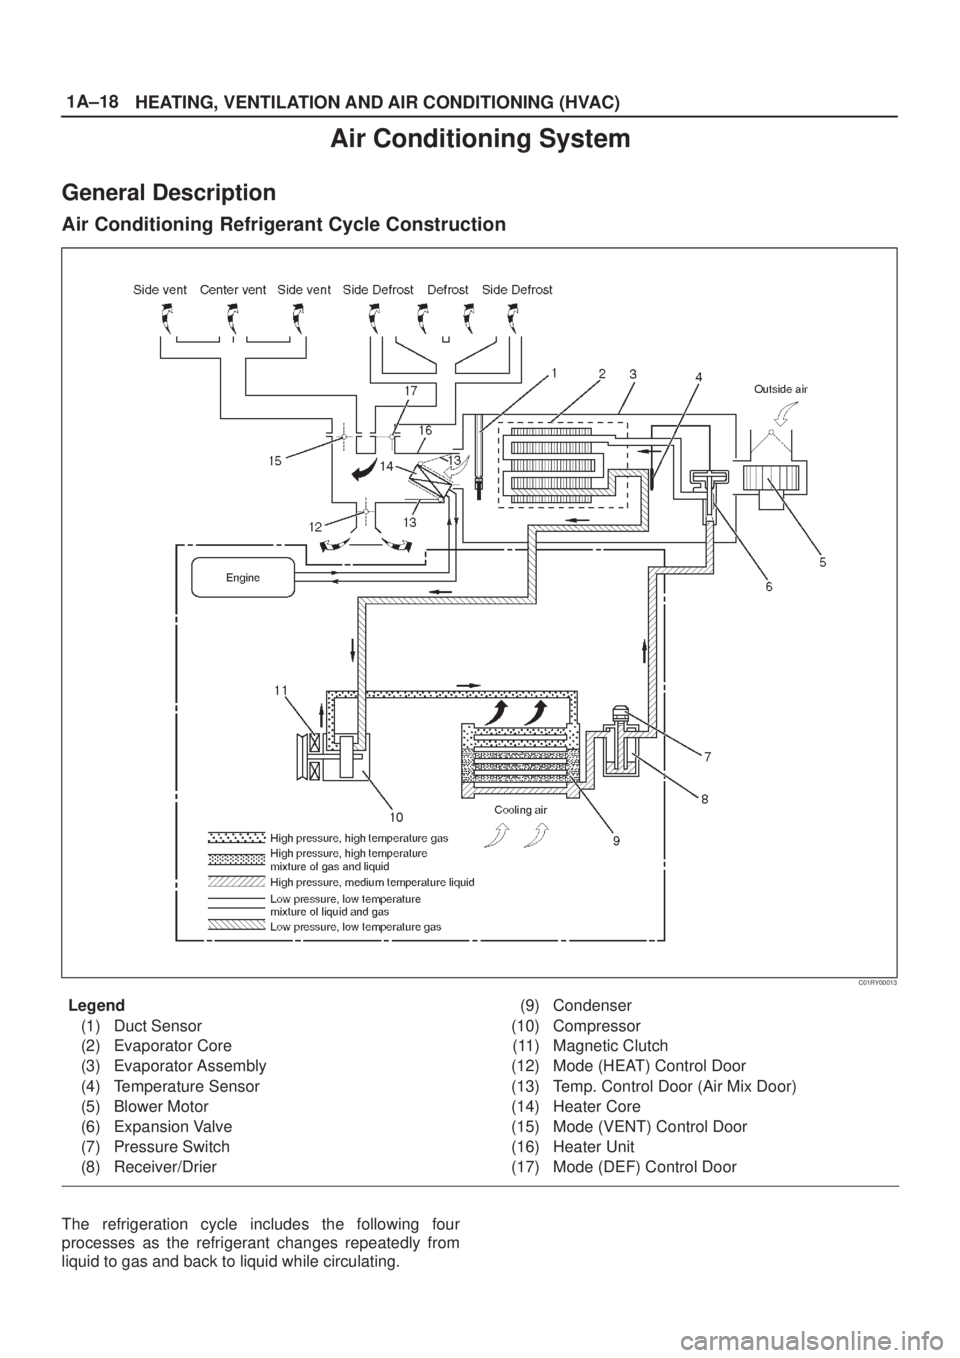 ISUZU AXIOM 2002  Service Repair Manual 1A±18
HEATING, VENTILATION AND AIR CONDITIONING (HVAC)
Air Conditioning System
General Description
Air Conditioning Refrigerant Cycle Construction
C01RY00013
Legend
(1) Duct Sensor
(2) Evaporator Cor